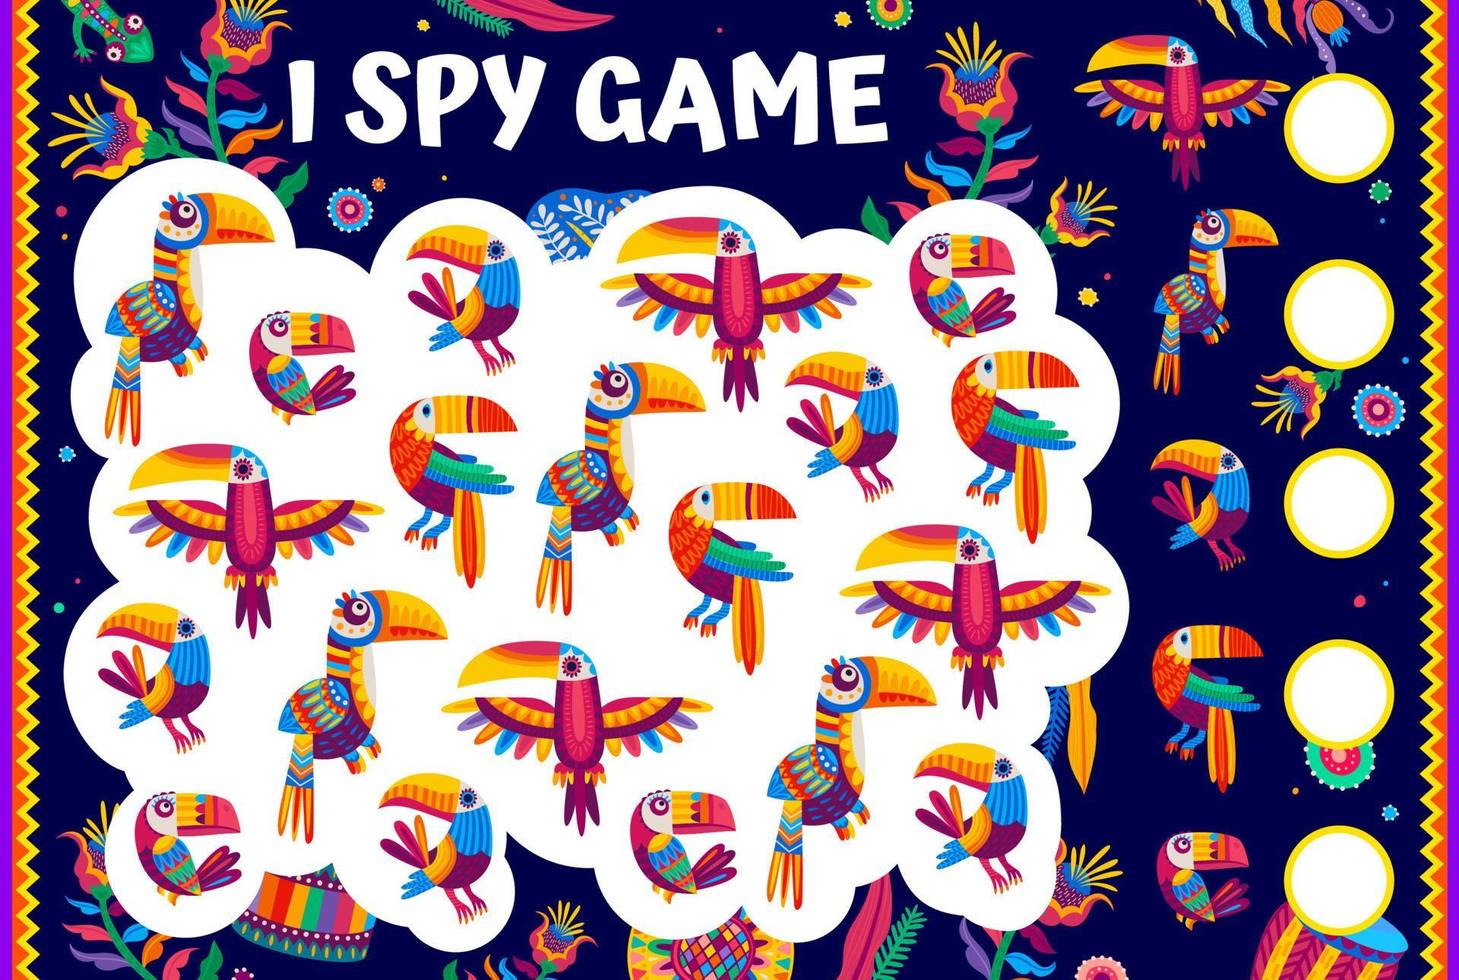 I spy game worksheet, Mexican cartoon toucan birds vector